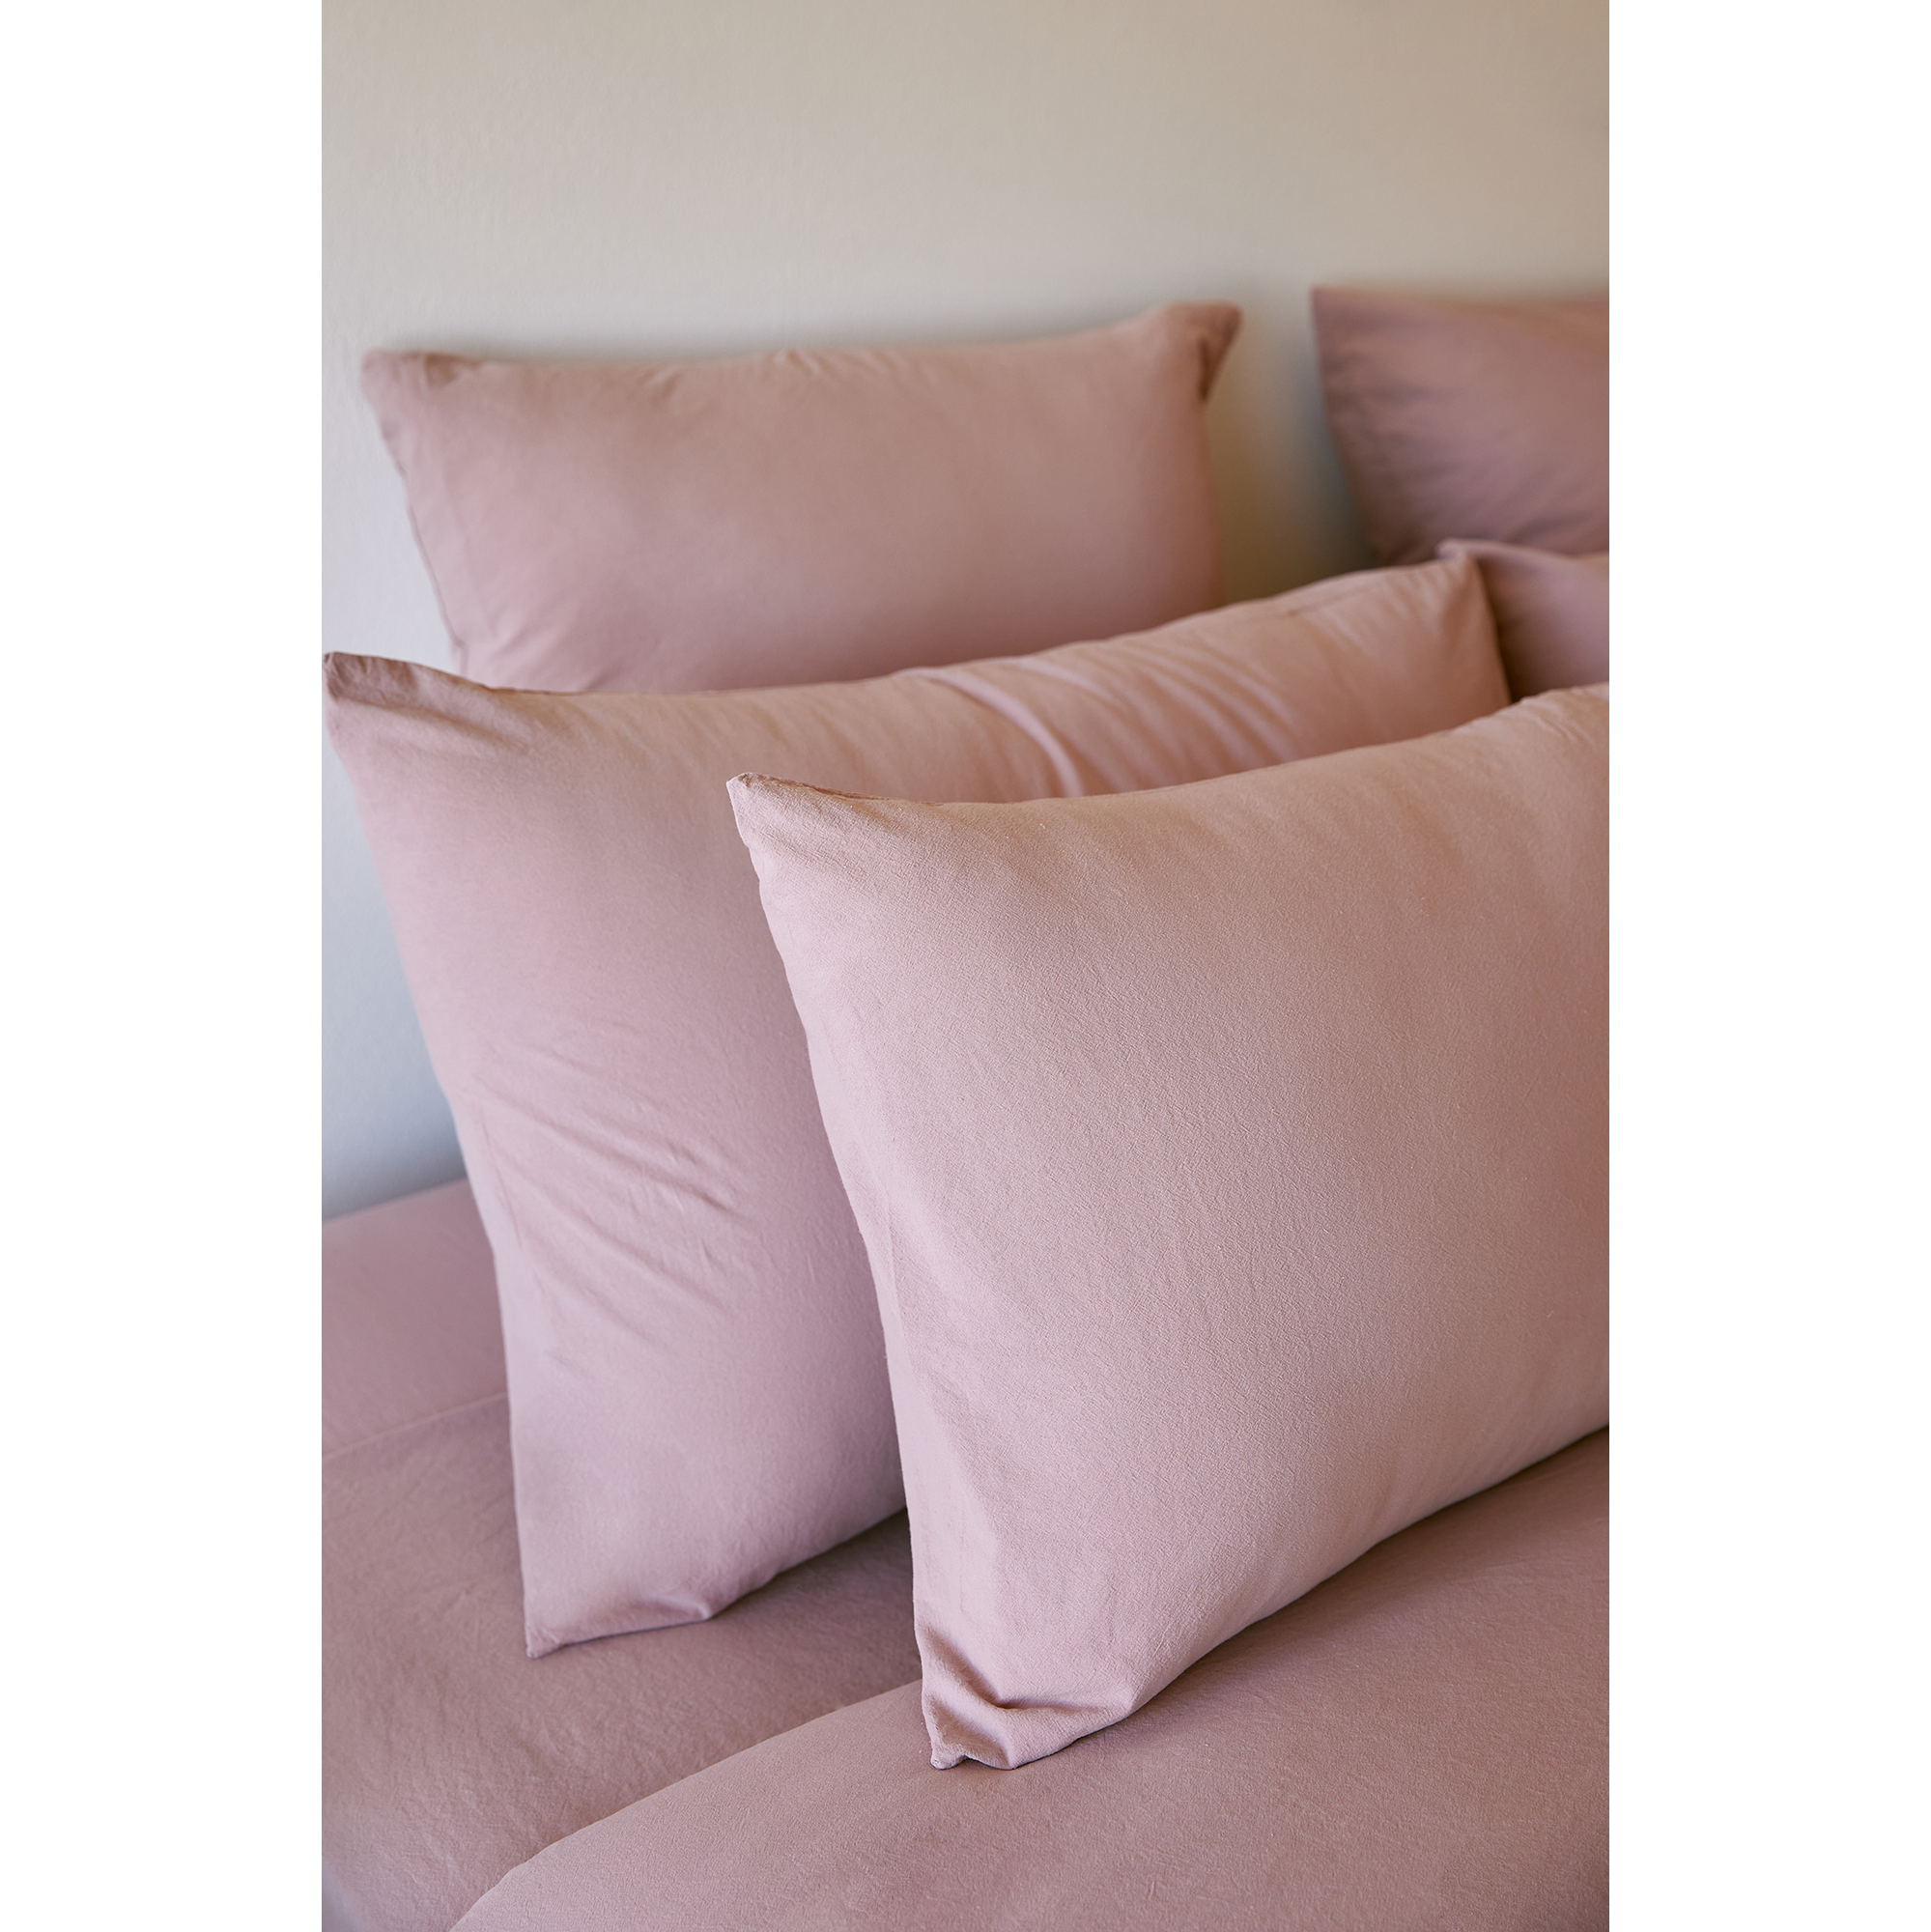 Torres Novas 1845 Pillowcase Old Pink - 50 x 75 cm - 2 pieces - Washed Cotton